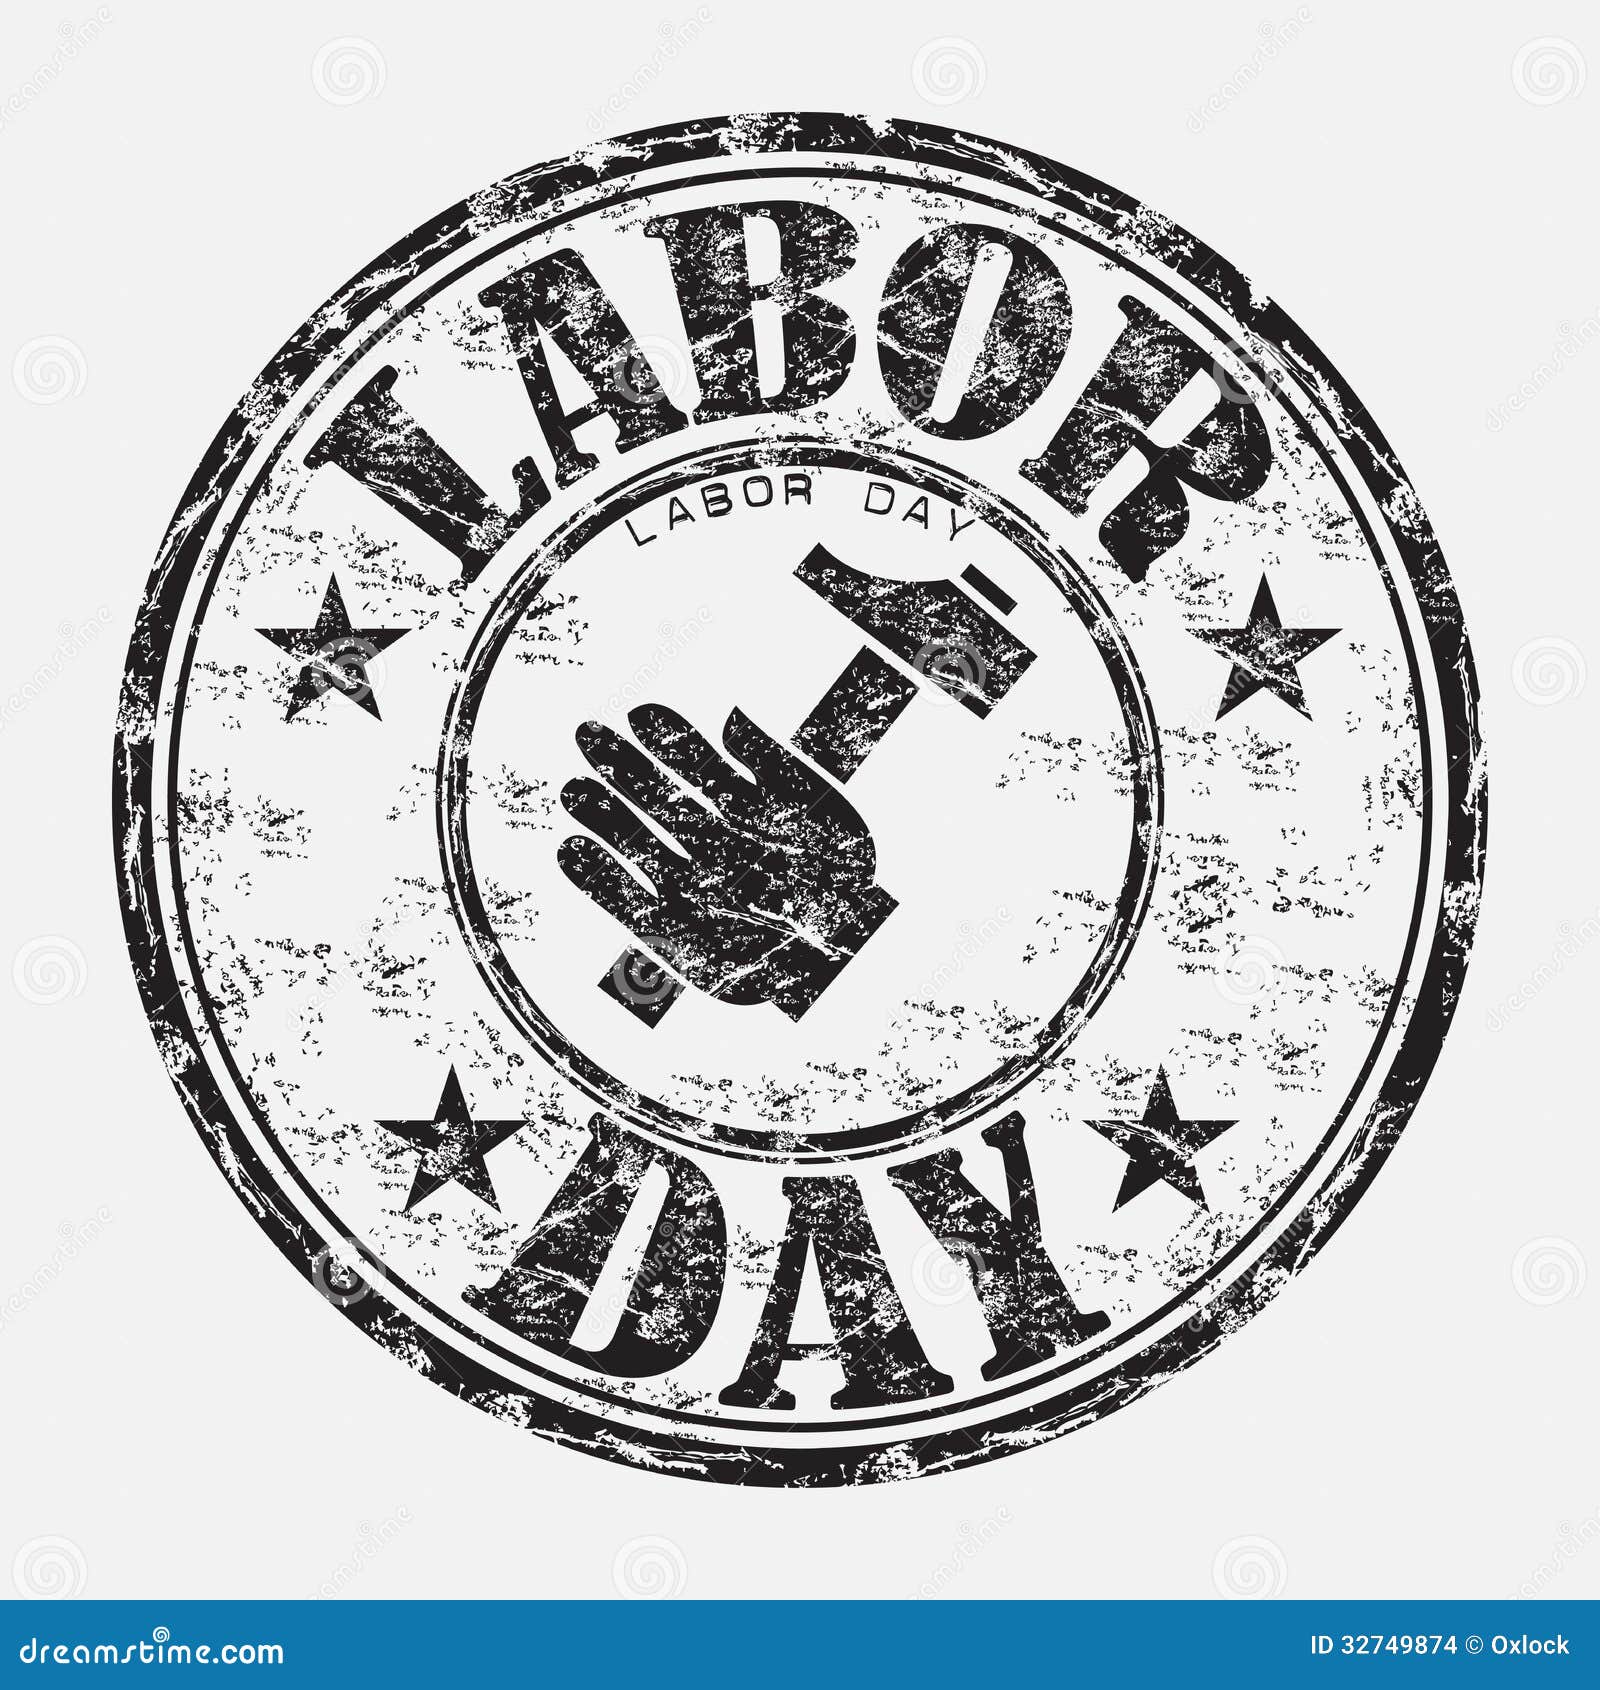 labor day grunge rubber stamp